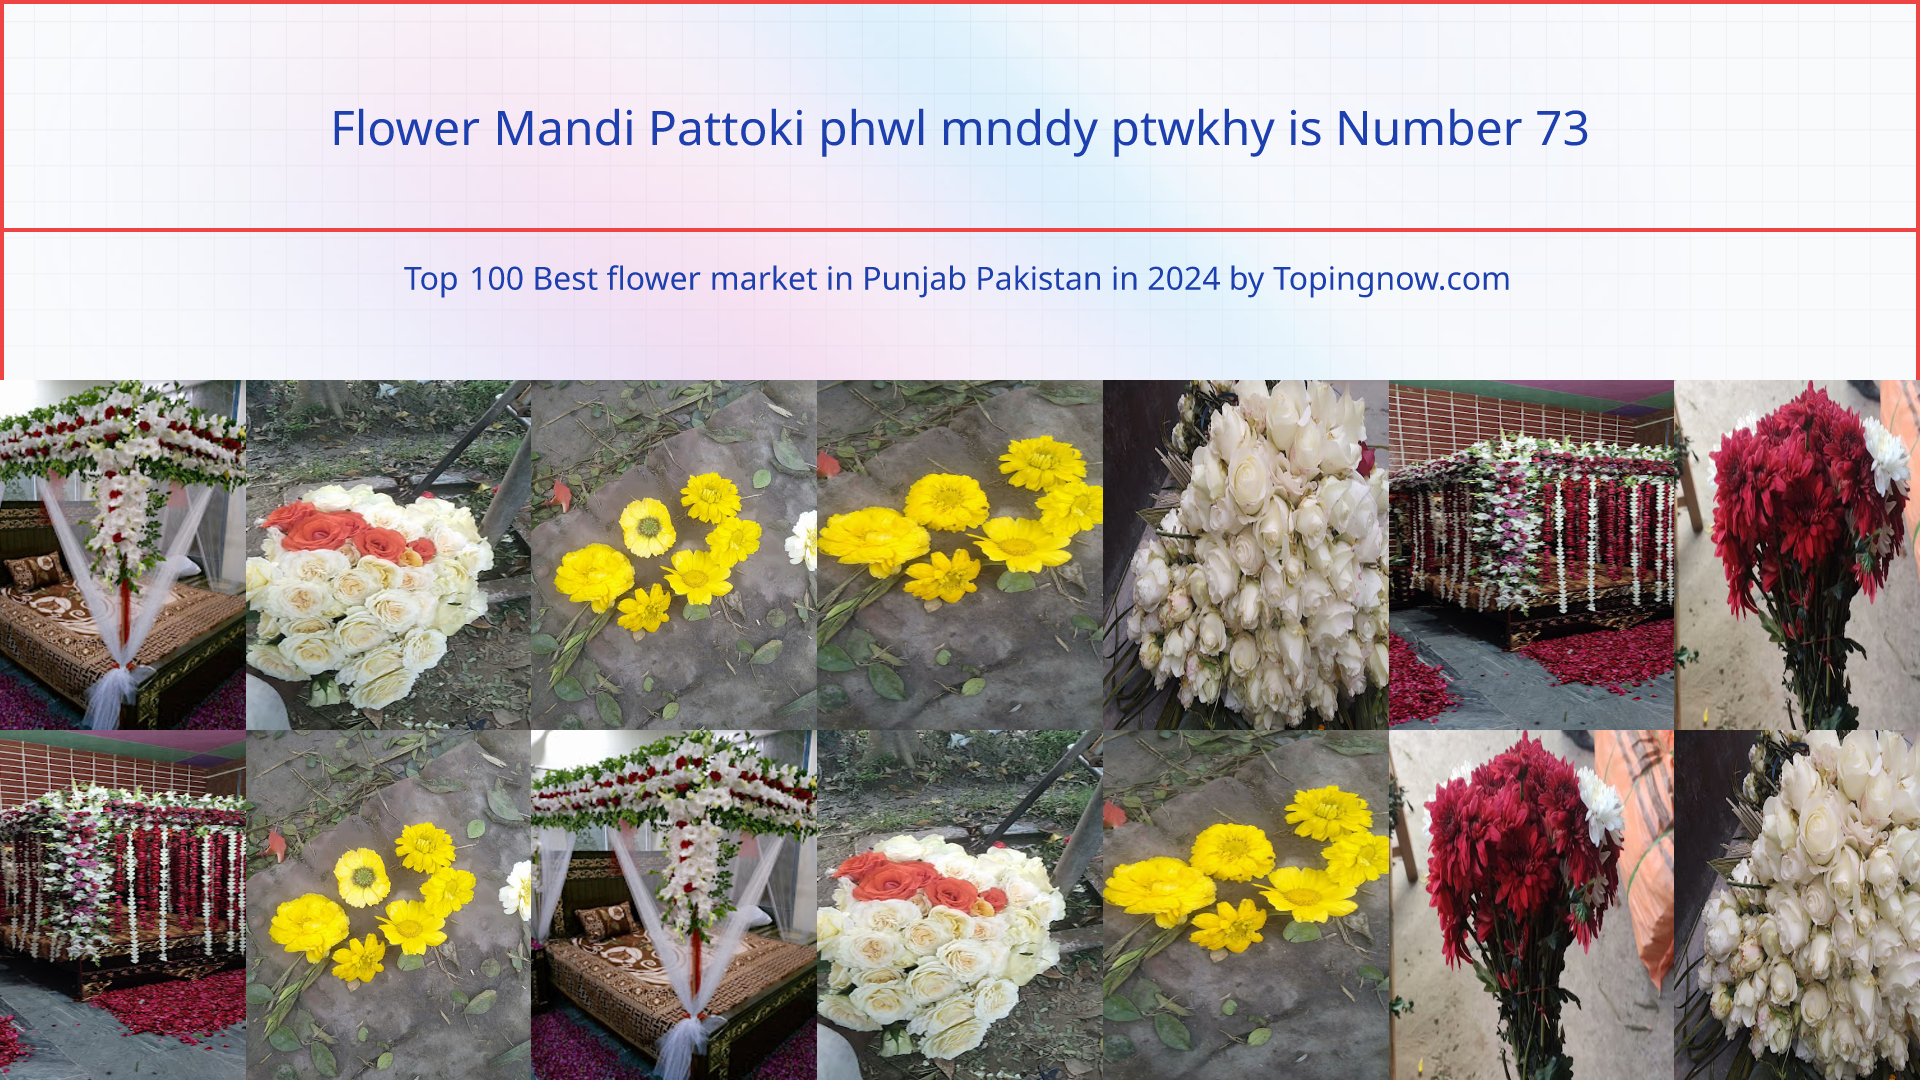 Flower Mandi Pattoki phwl mnddy ptwkhy: Top 100 Best flower market in Punjab Pakistan in 2024